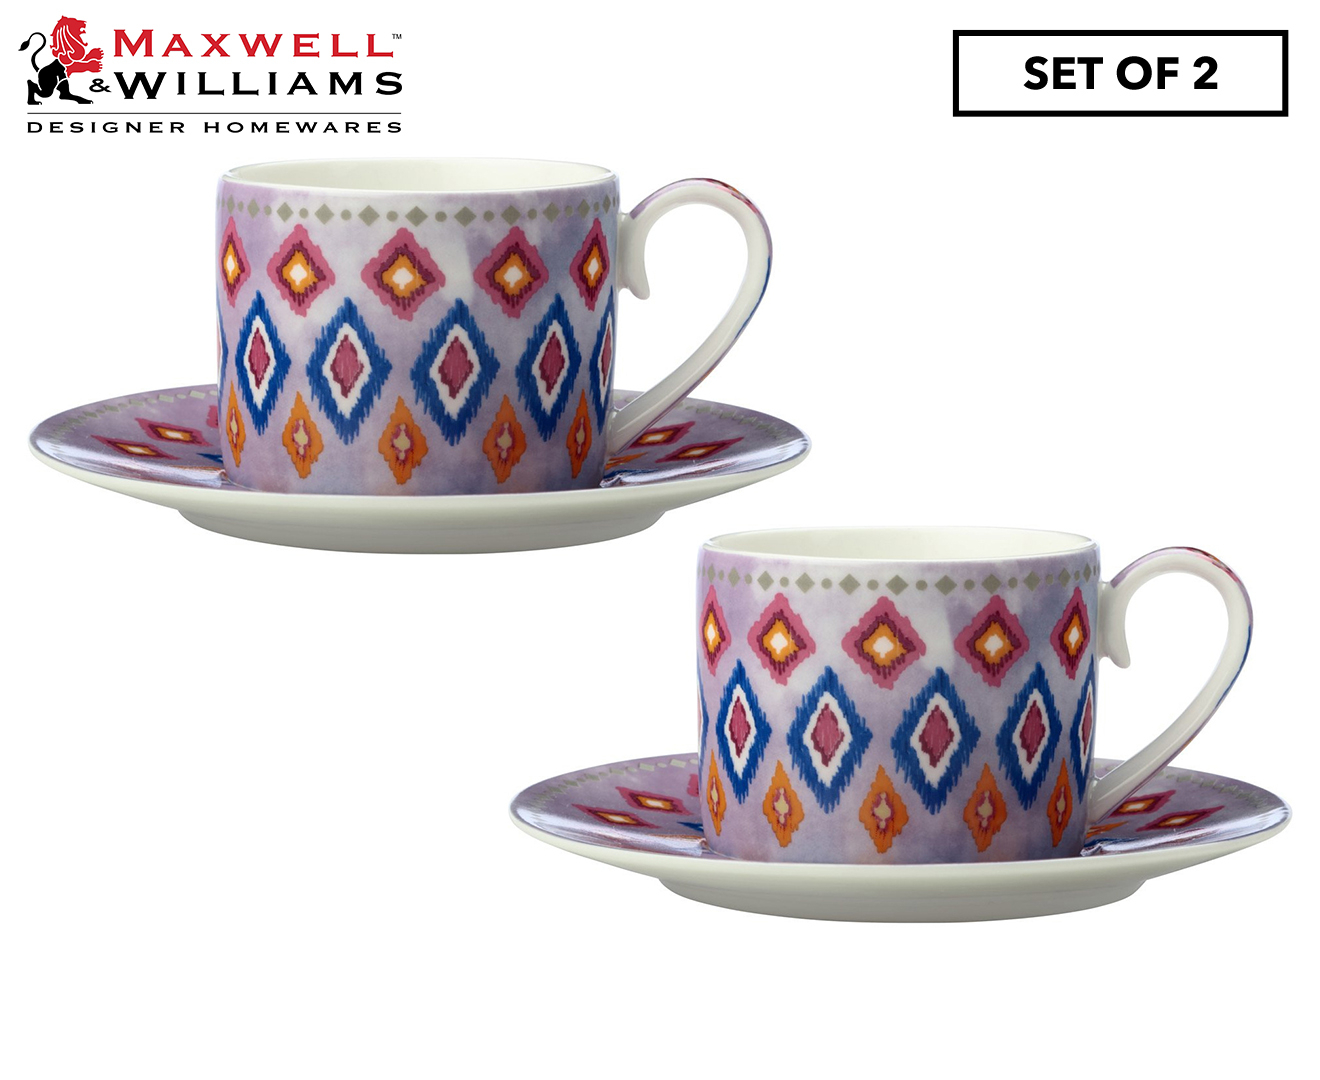 Maxwell & Williams Teas & C's Regency Demi Cup & Saucer 100ML Set